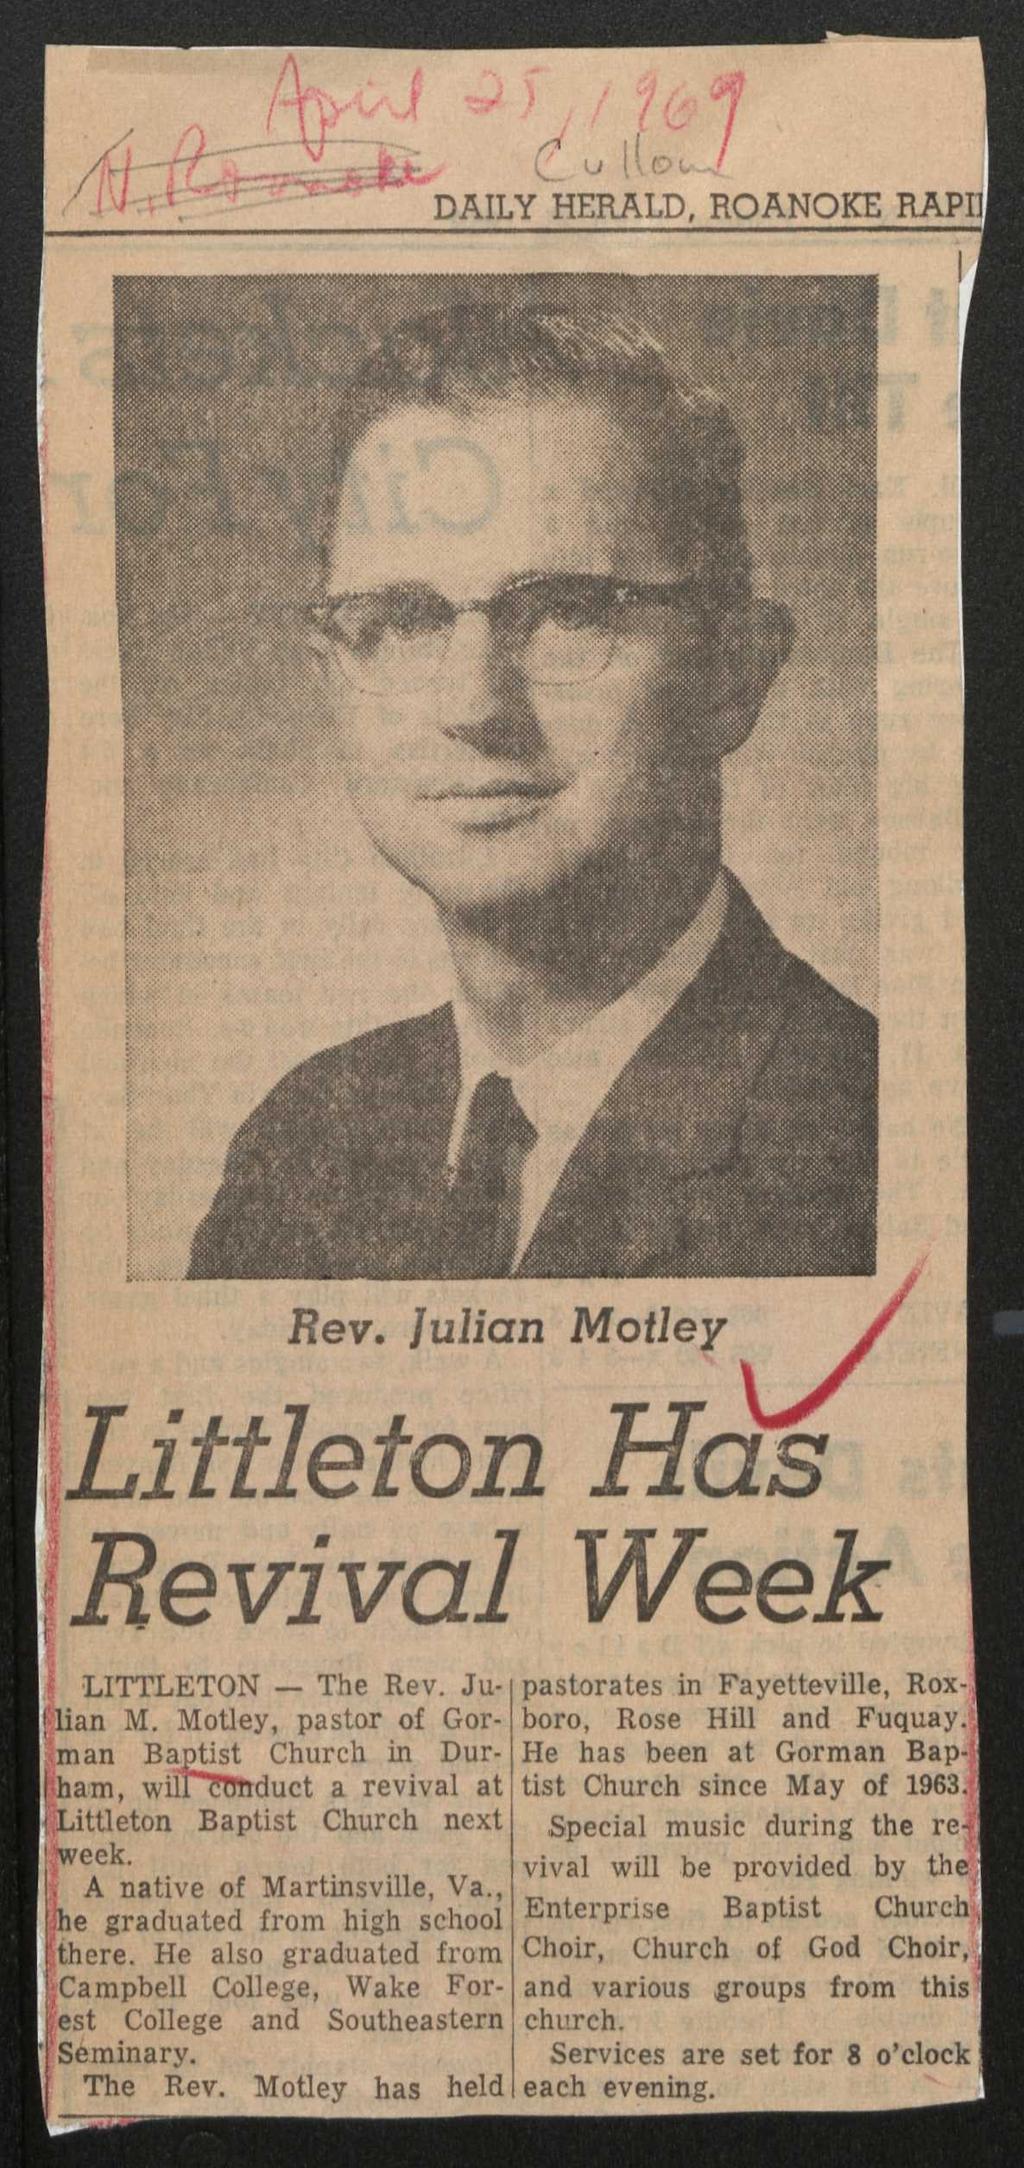 .. I I{ C u [I L DAILY HERALD Rev. Julian Motley,I,,_...ittleton Has Revival Week LITTLETON - The Rev. Ju- M.